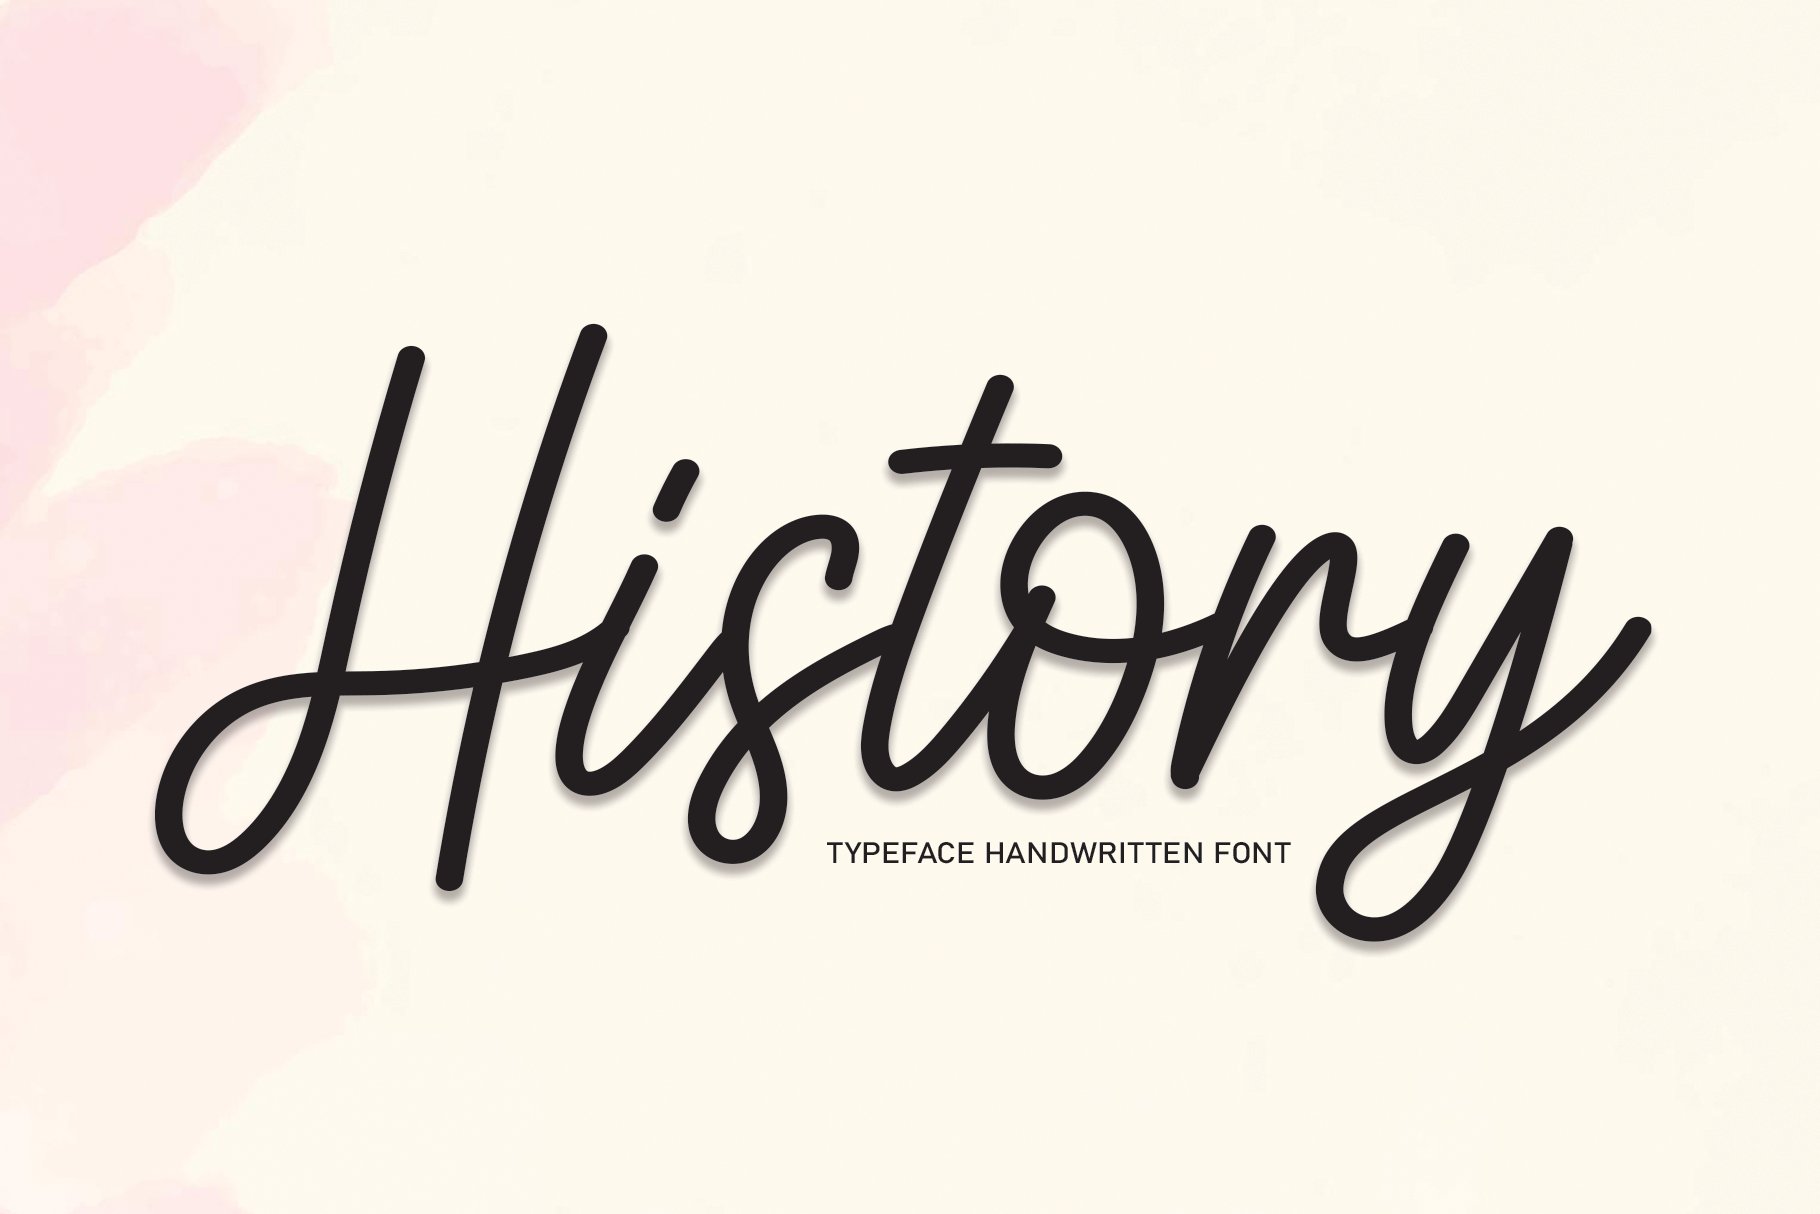 History | Script Font cover image.